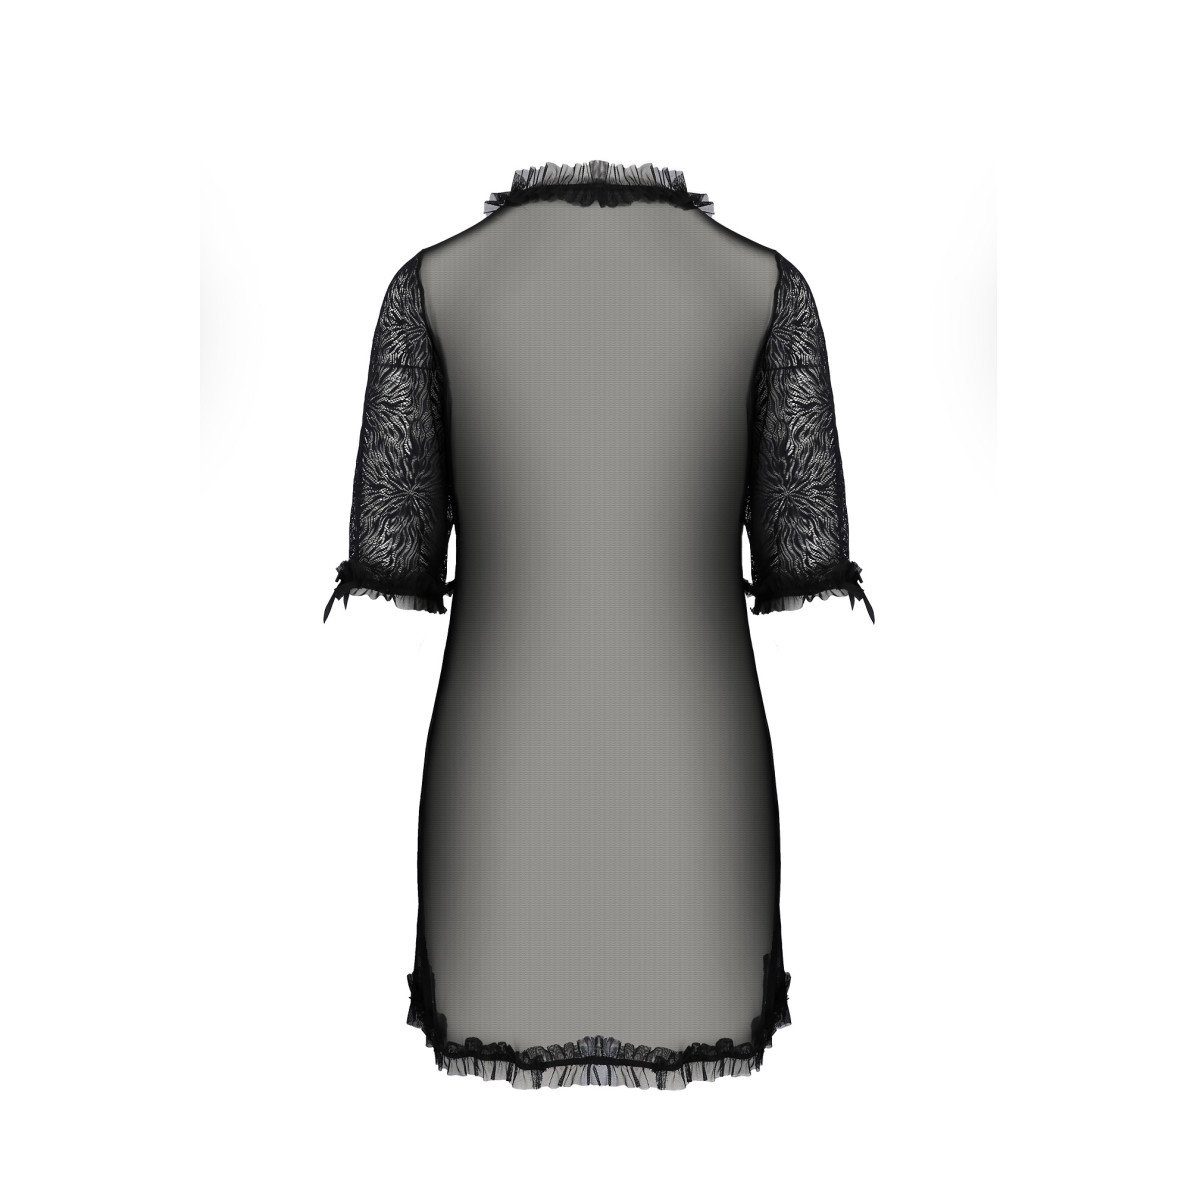 Selaginella - Eco ECO Nachthemd Passion black PE (L/XL,S/M,XXL) Collection peignoir